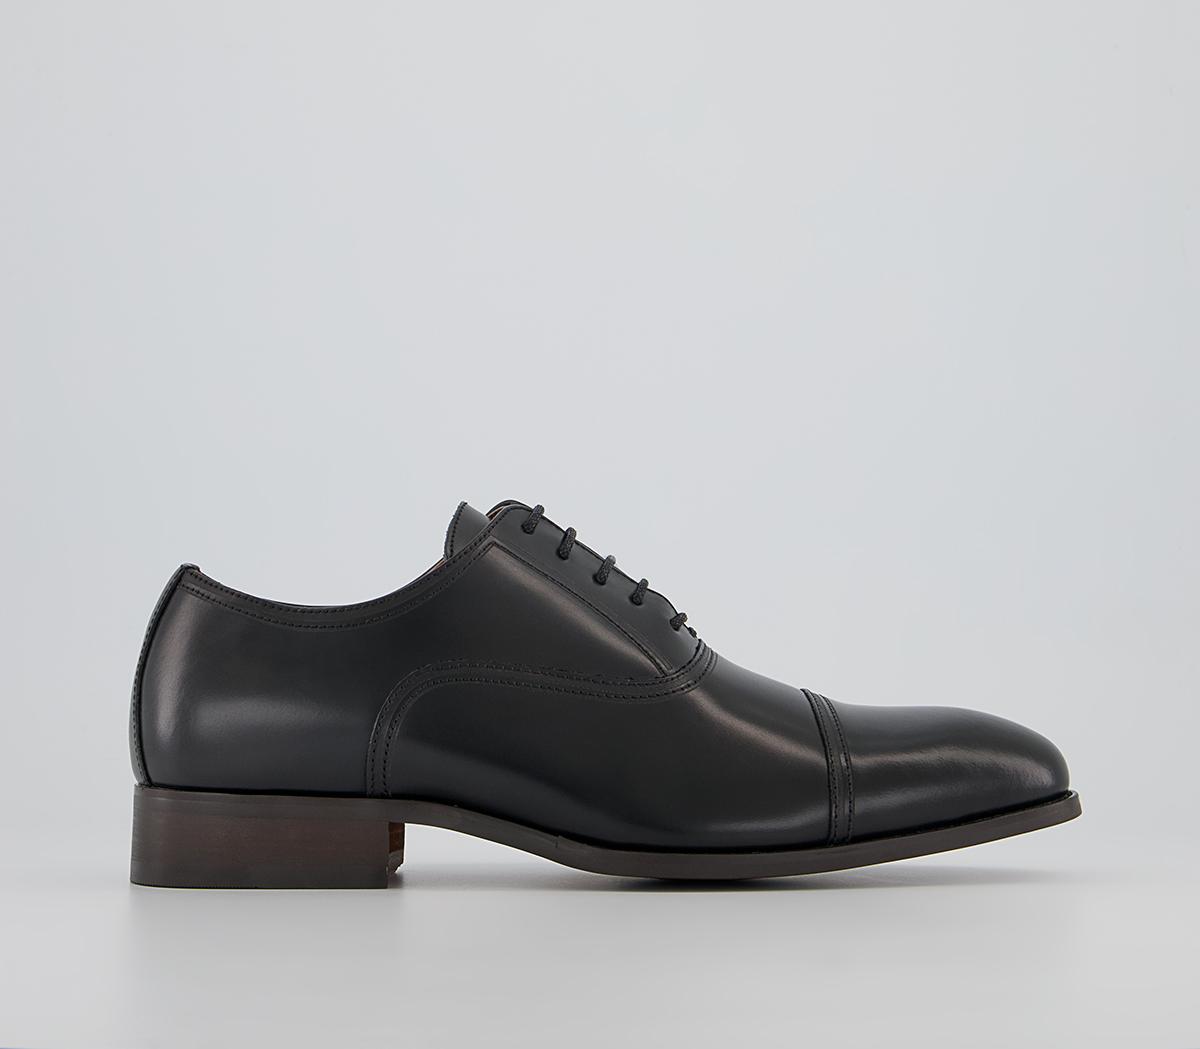 OFFICE Maresco High Shine Toe Cap Oxford Shoes Black Leather - Men’s ...